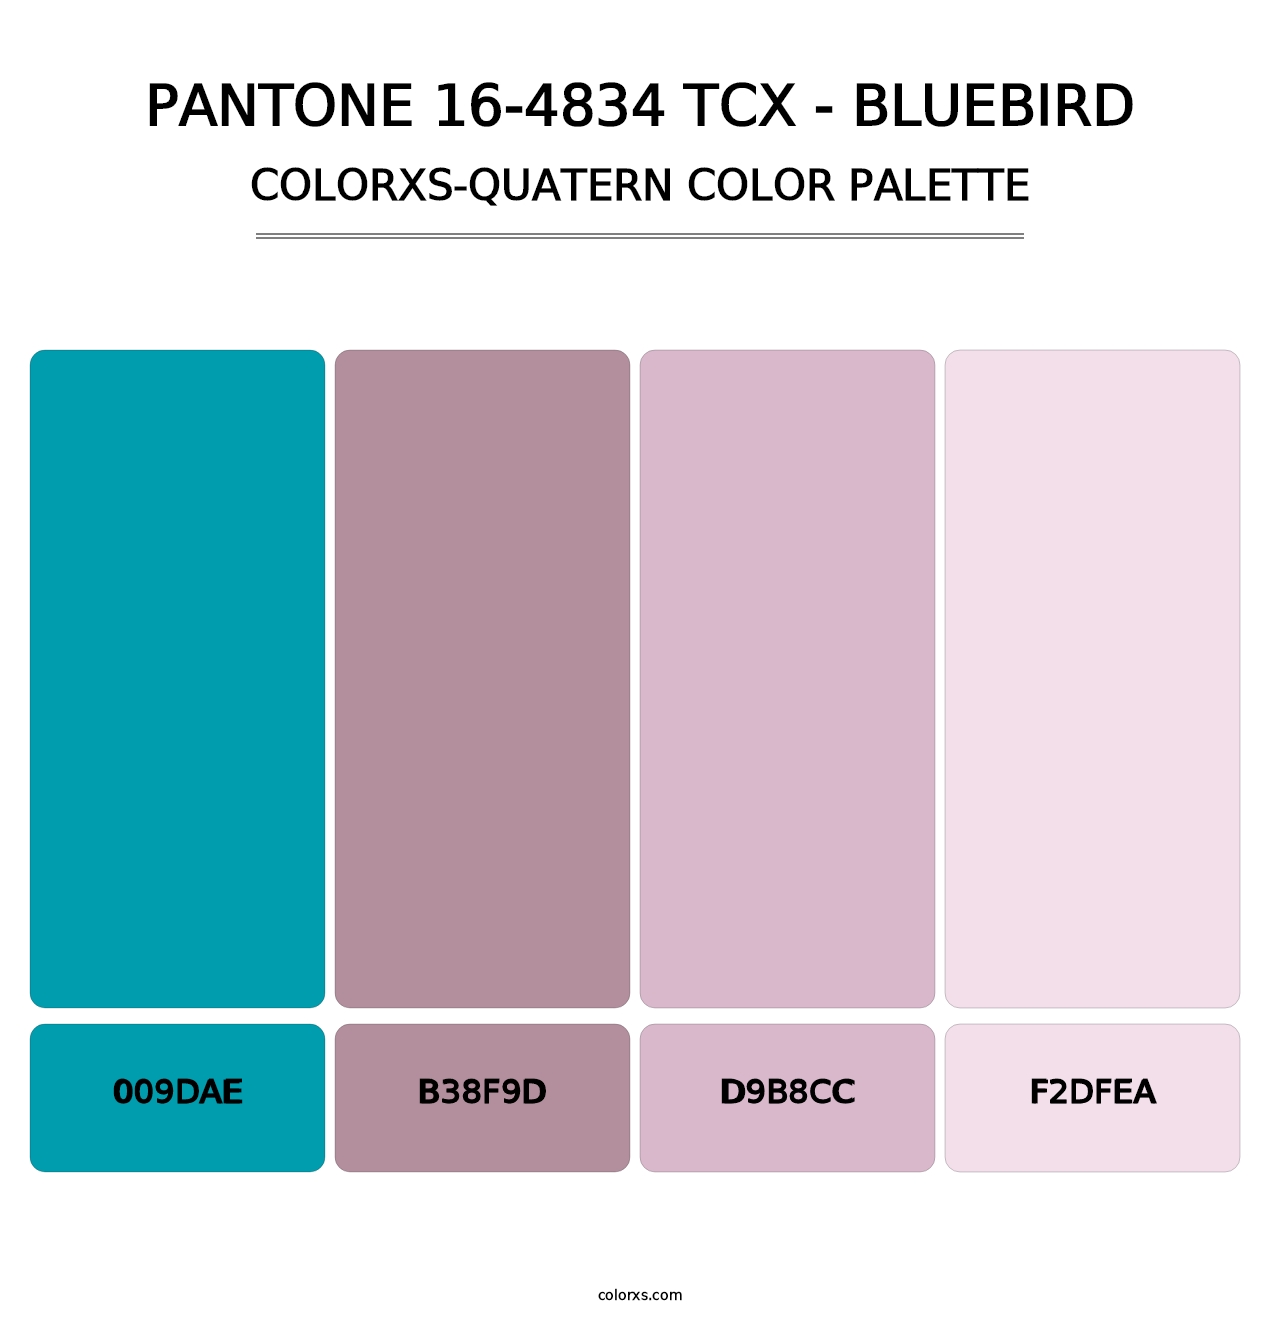 PANTONE 16-4834 TCX - Bluebird - Colorxs Quatern Palette